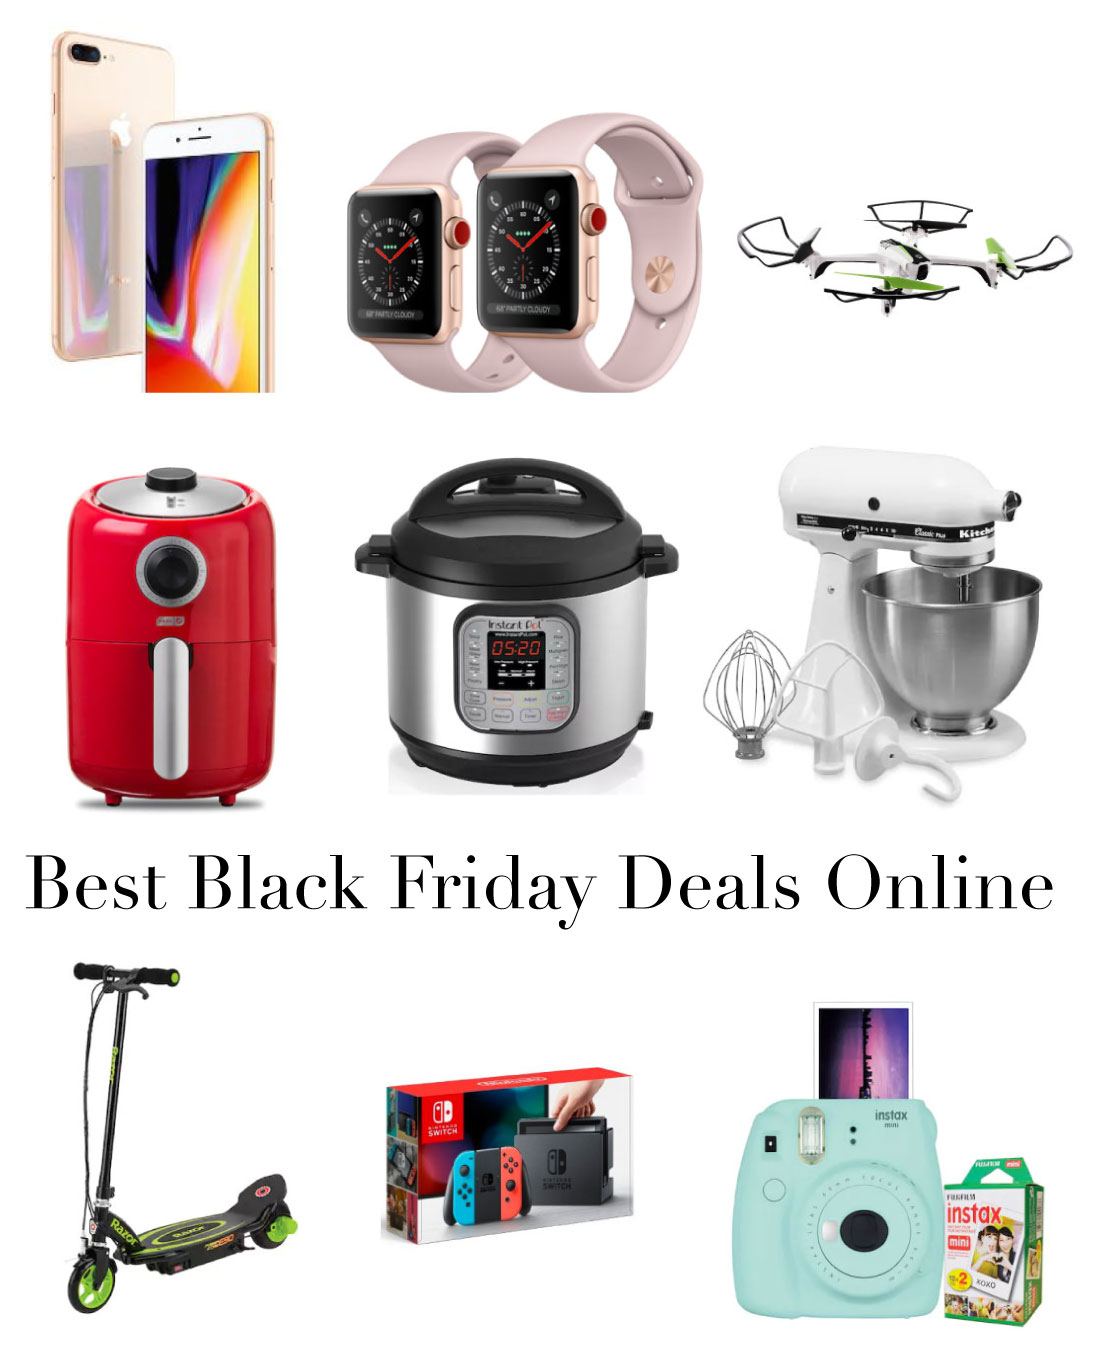 Best Black Friday Deals Online This Year